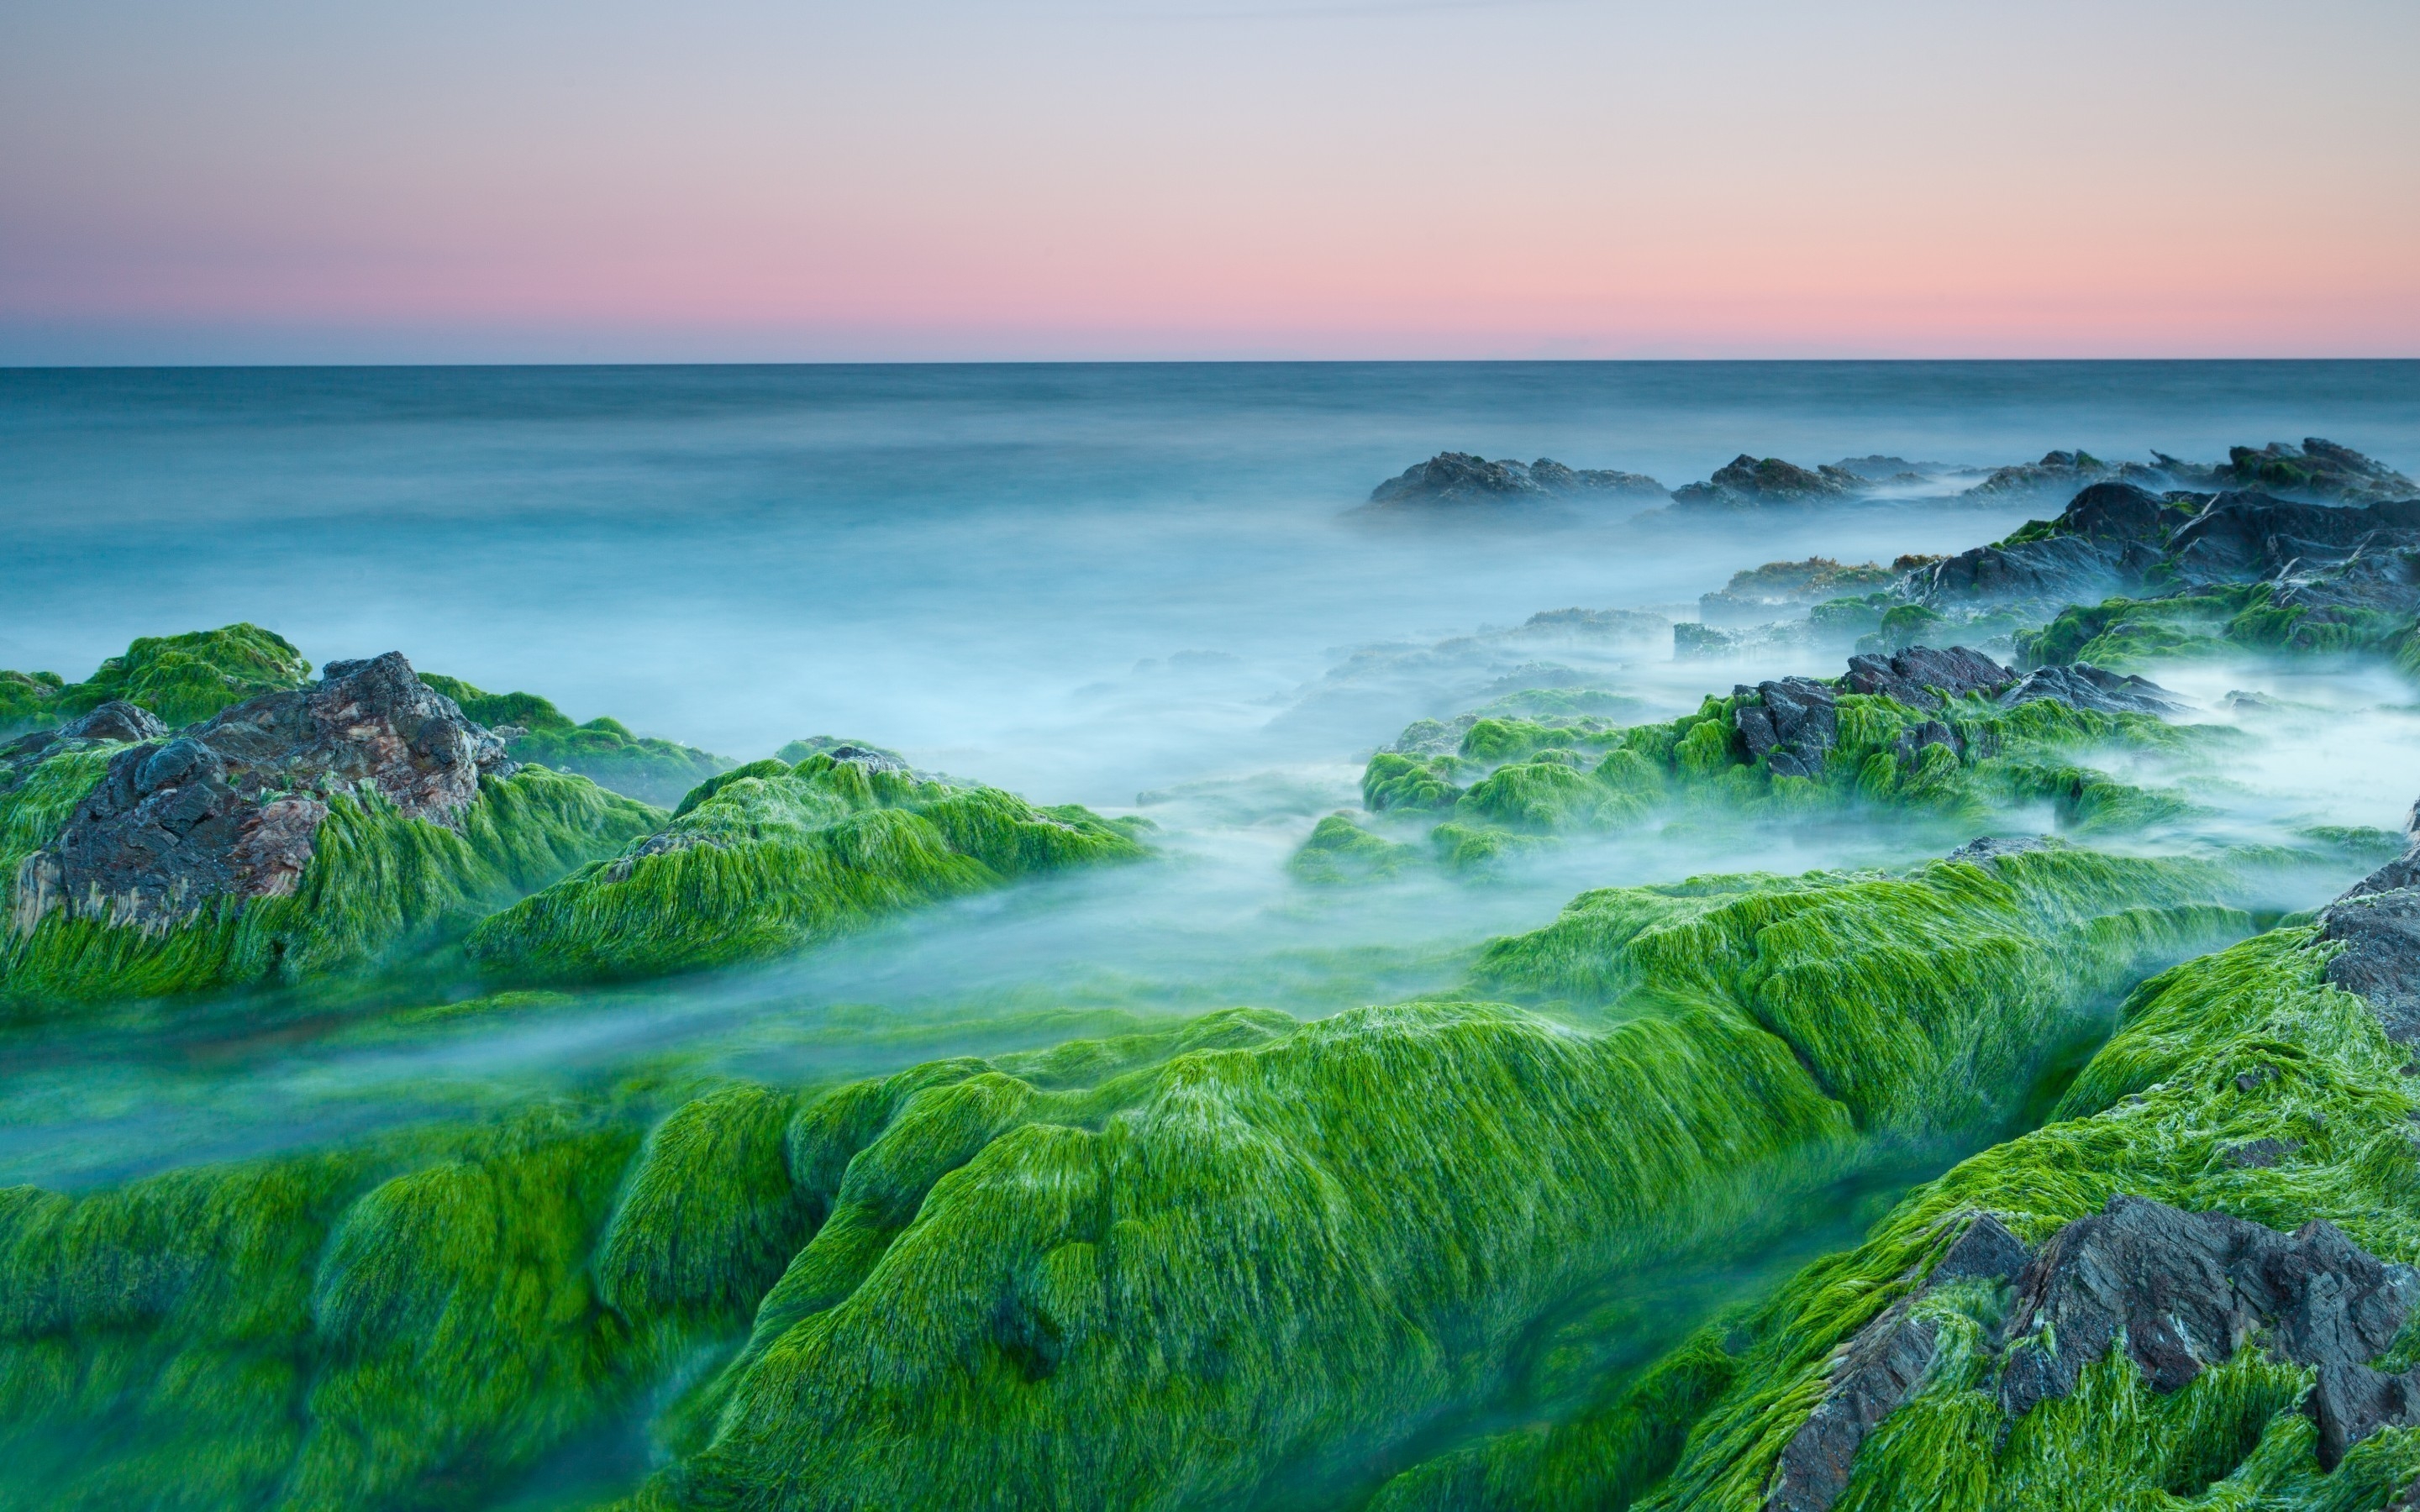 Green Algae On Rocks for 2880 x 1800 Retina Display resolution